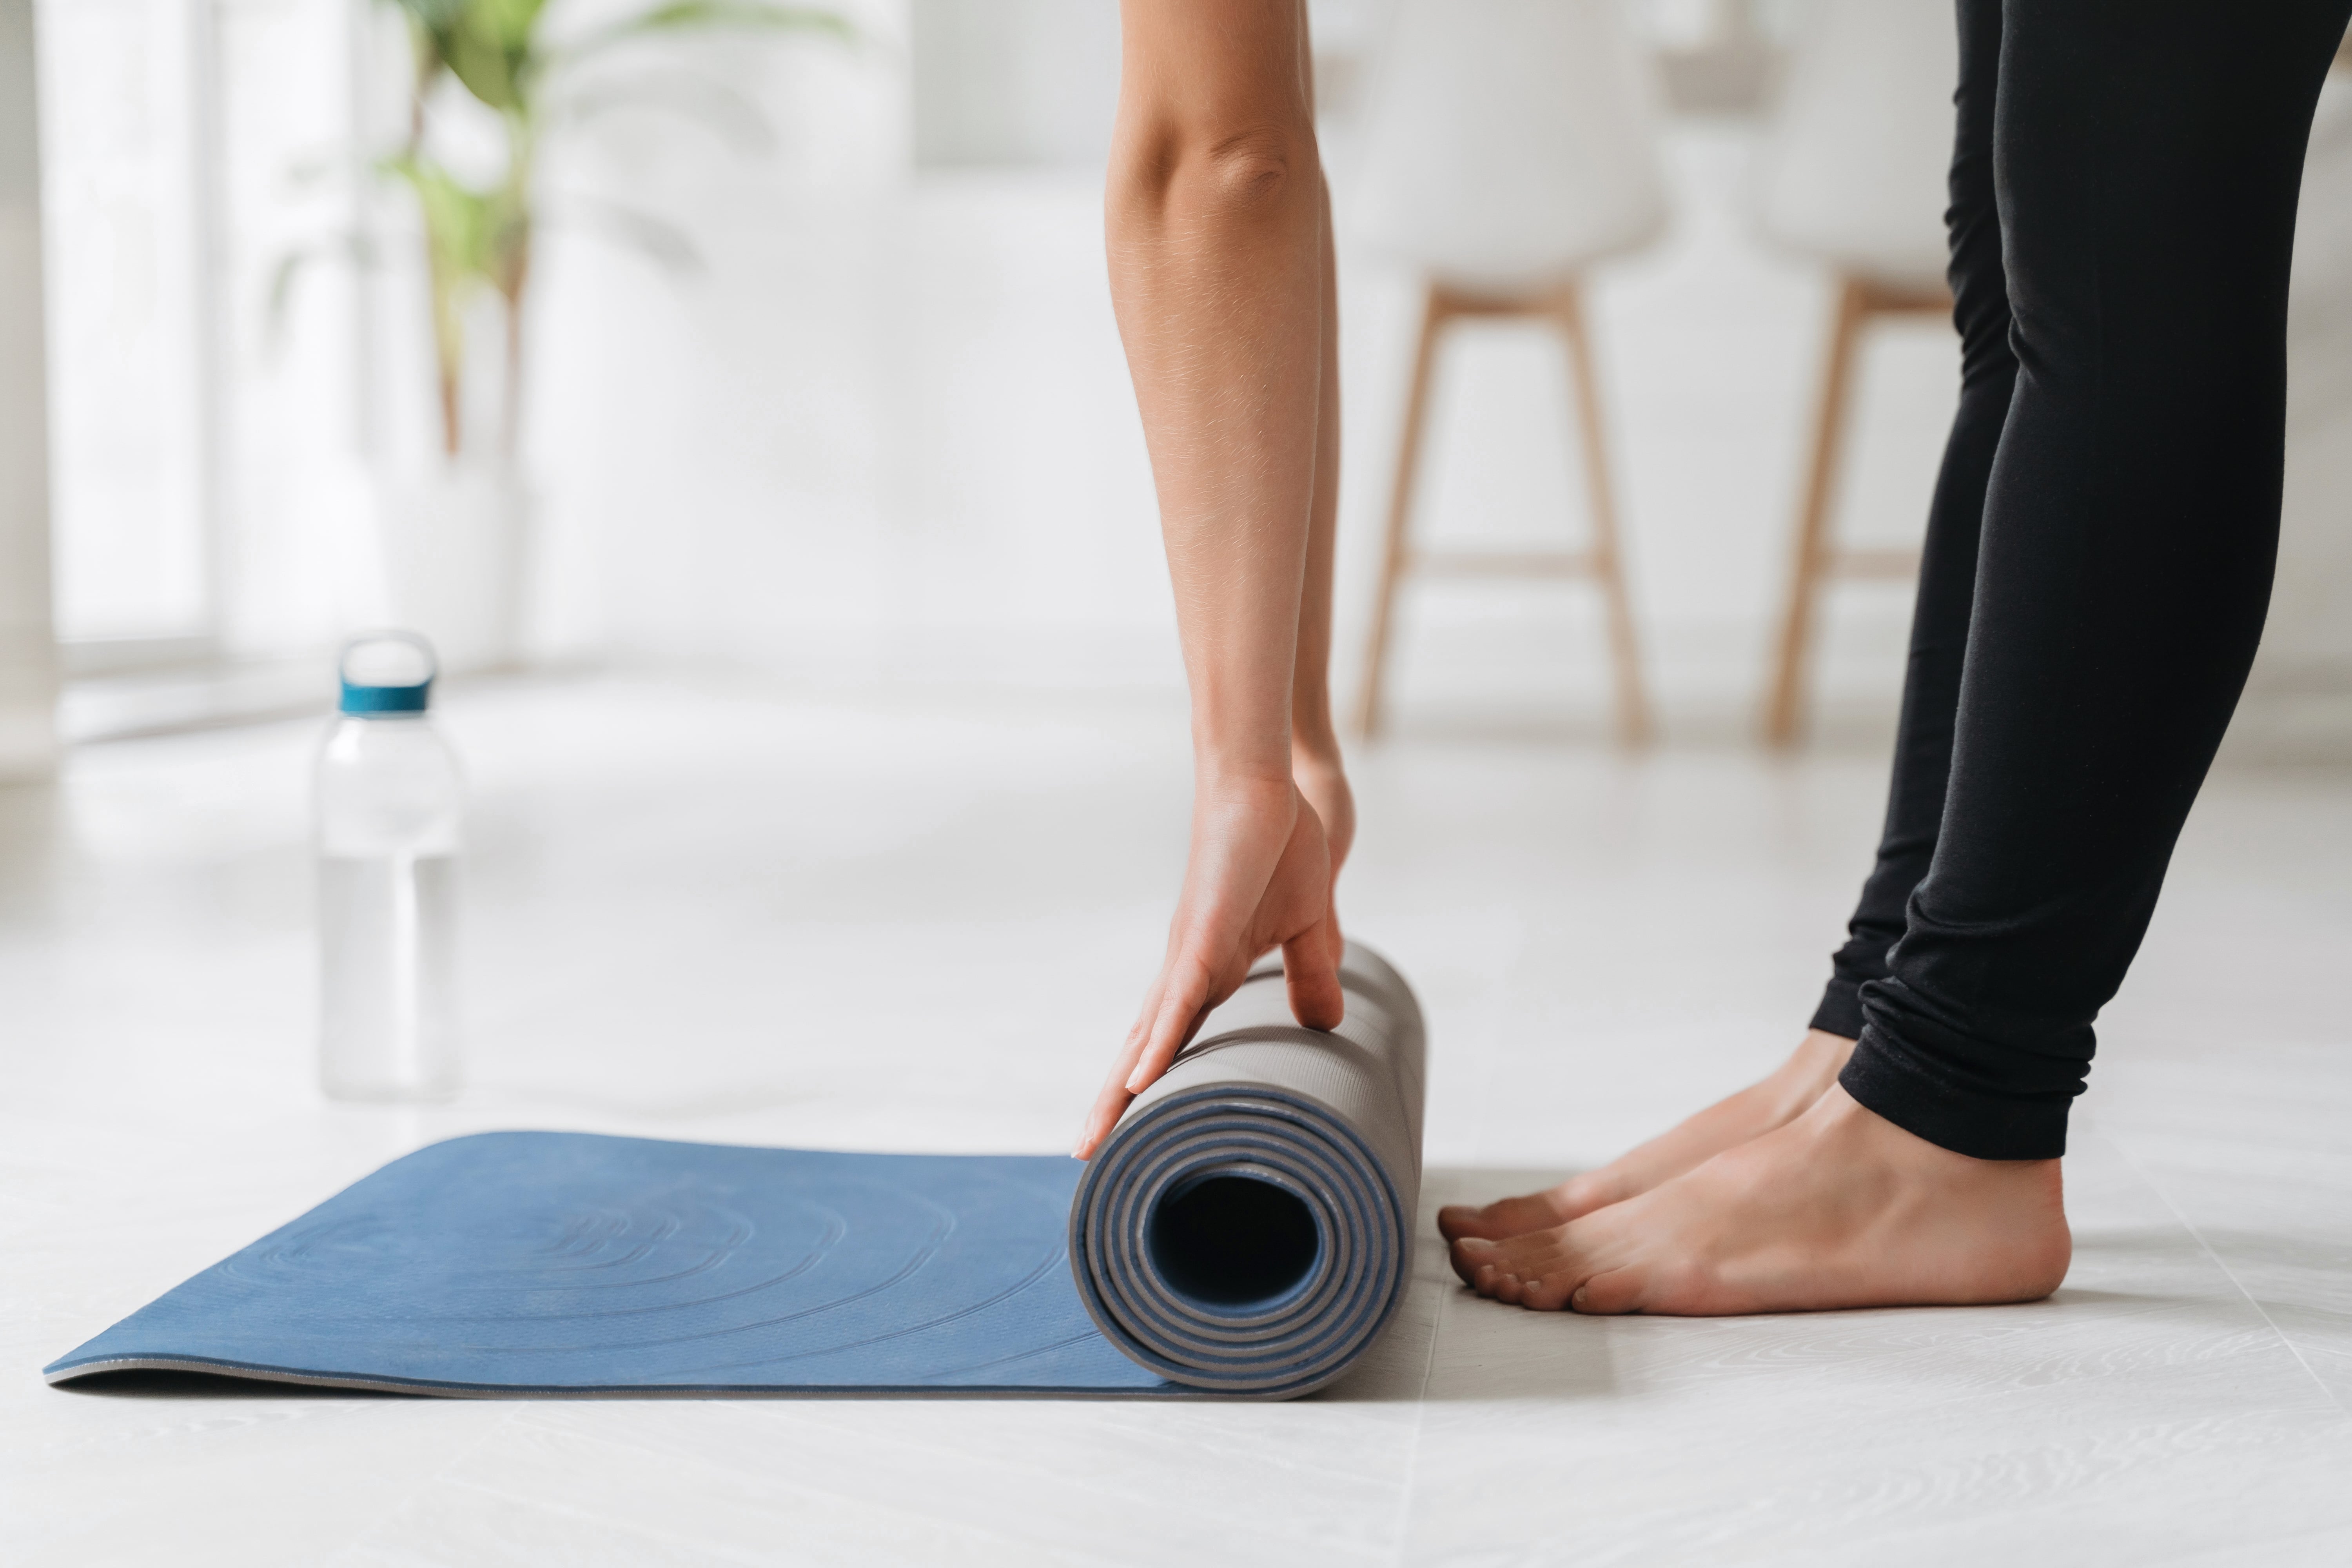 fit-girl-preparing-exercise-mat-for-yoga-session